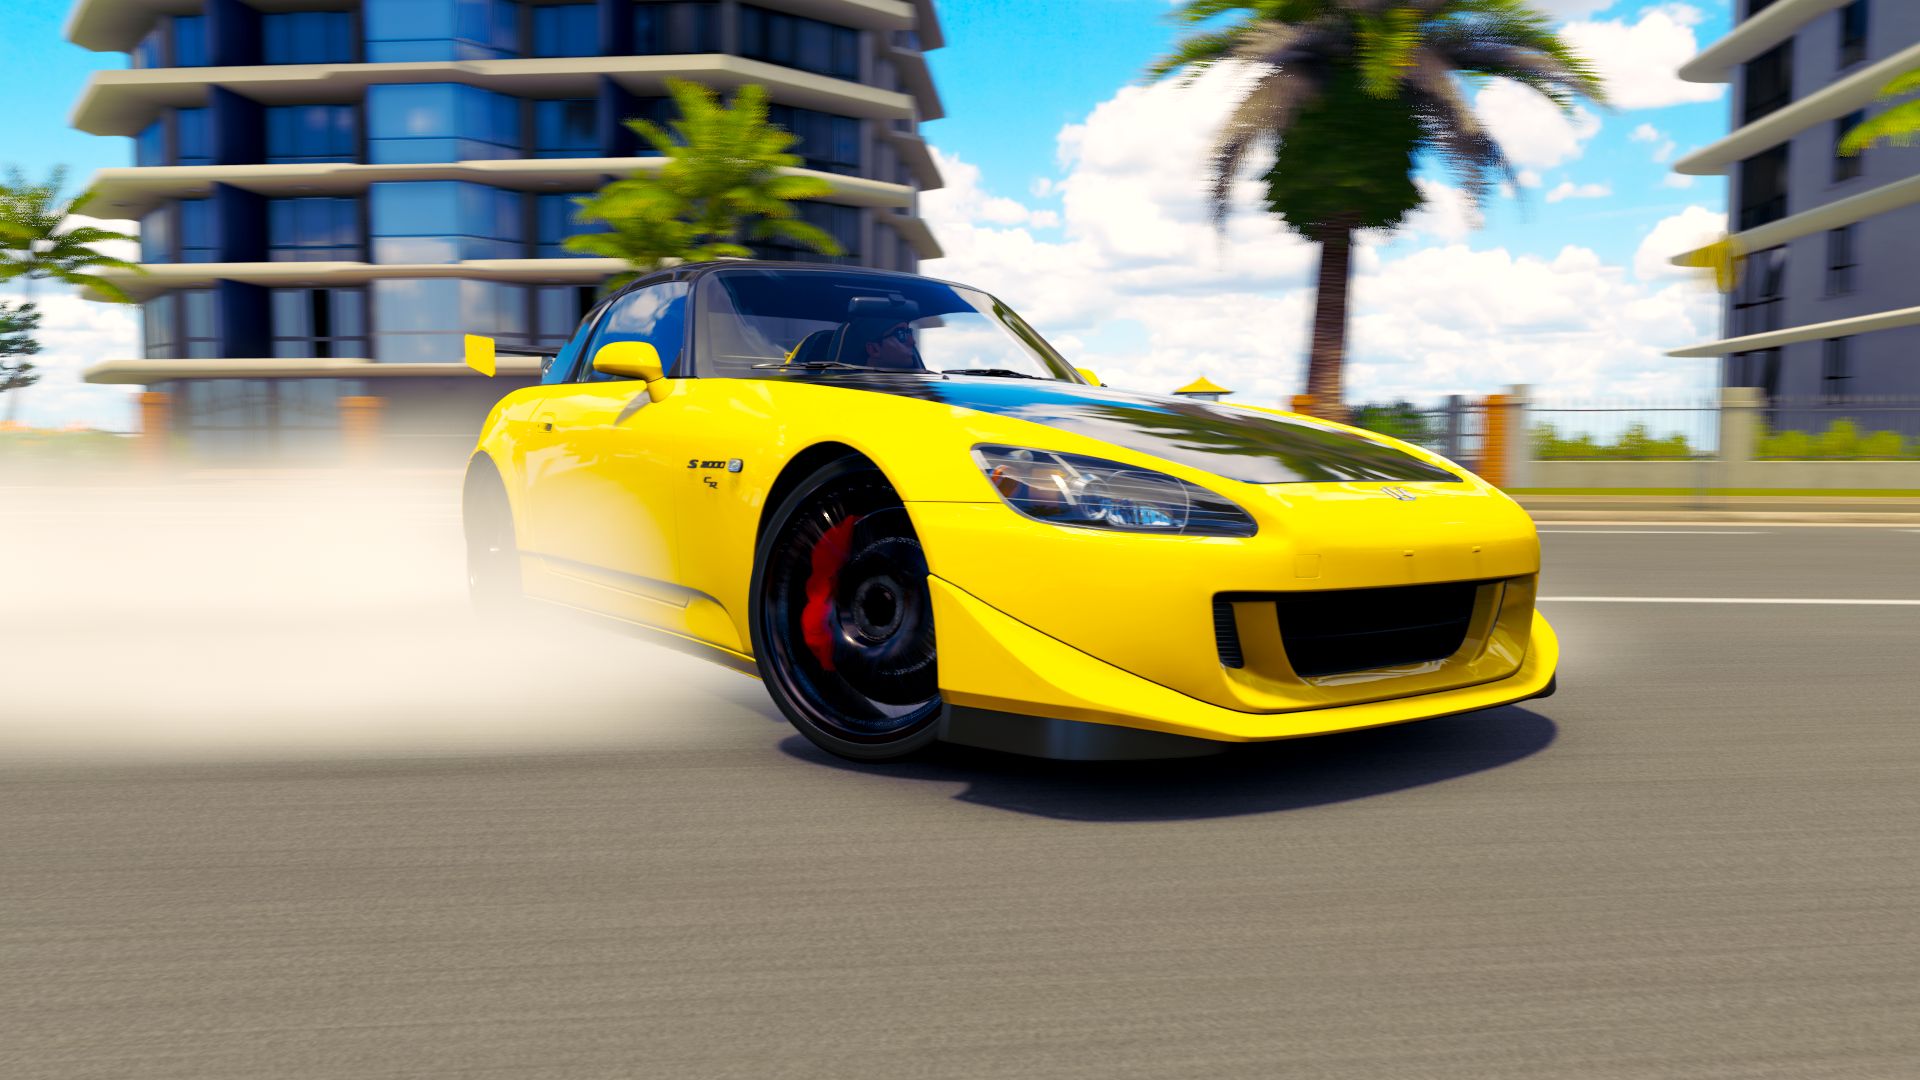 drifting, video game, forza horizon 3, car, honda s2000, yellow car, forza